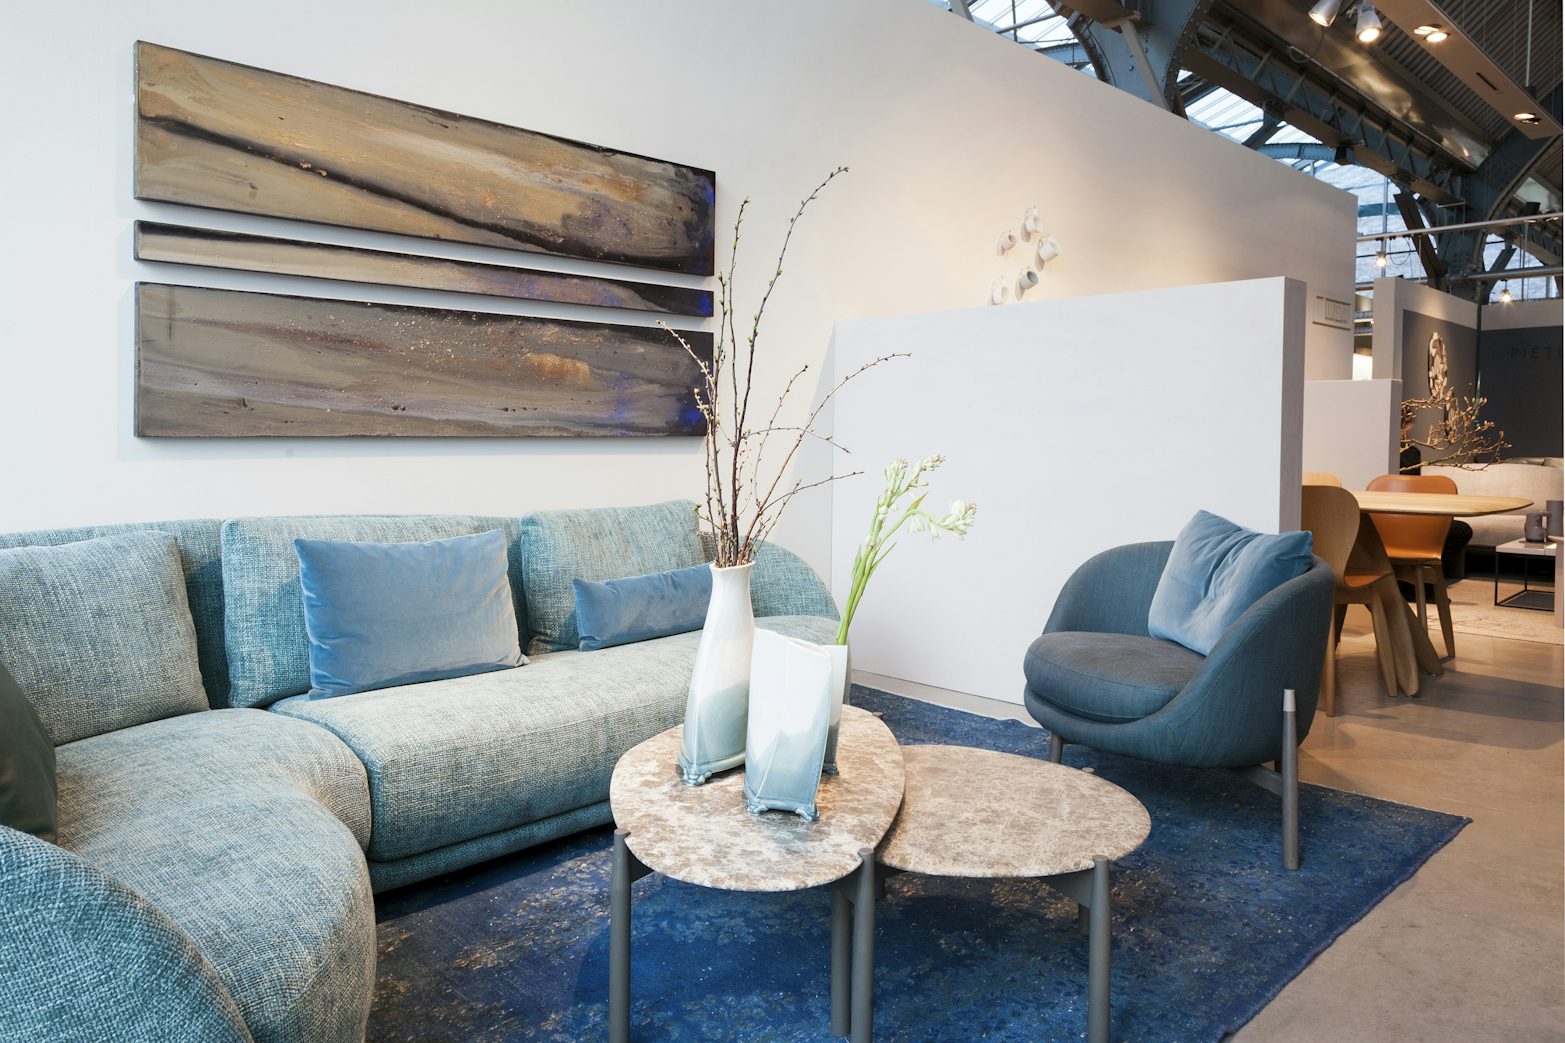 Linteloo Heath Lounge Chair Context Gallery 15